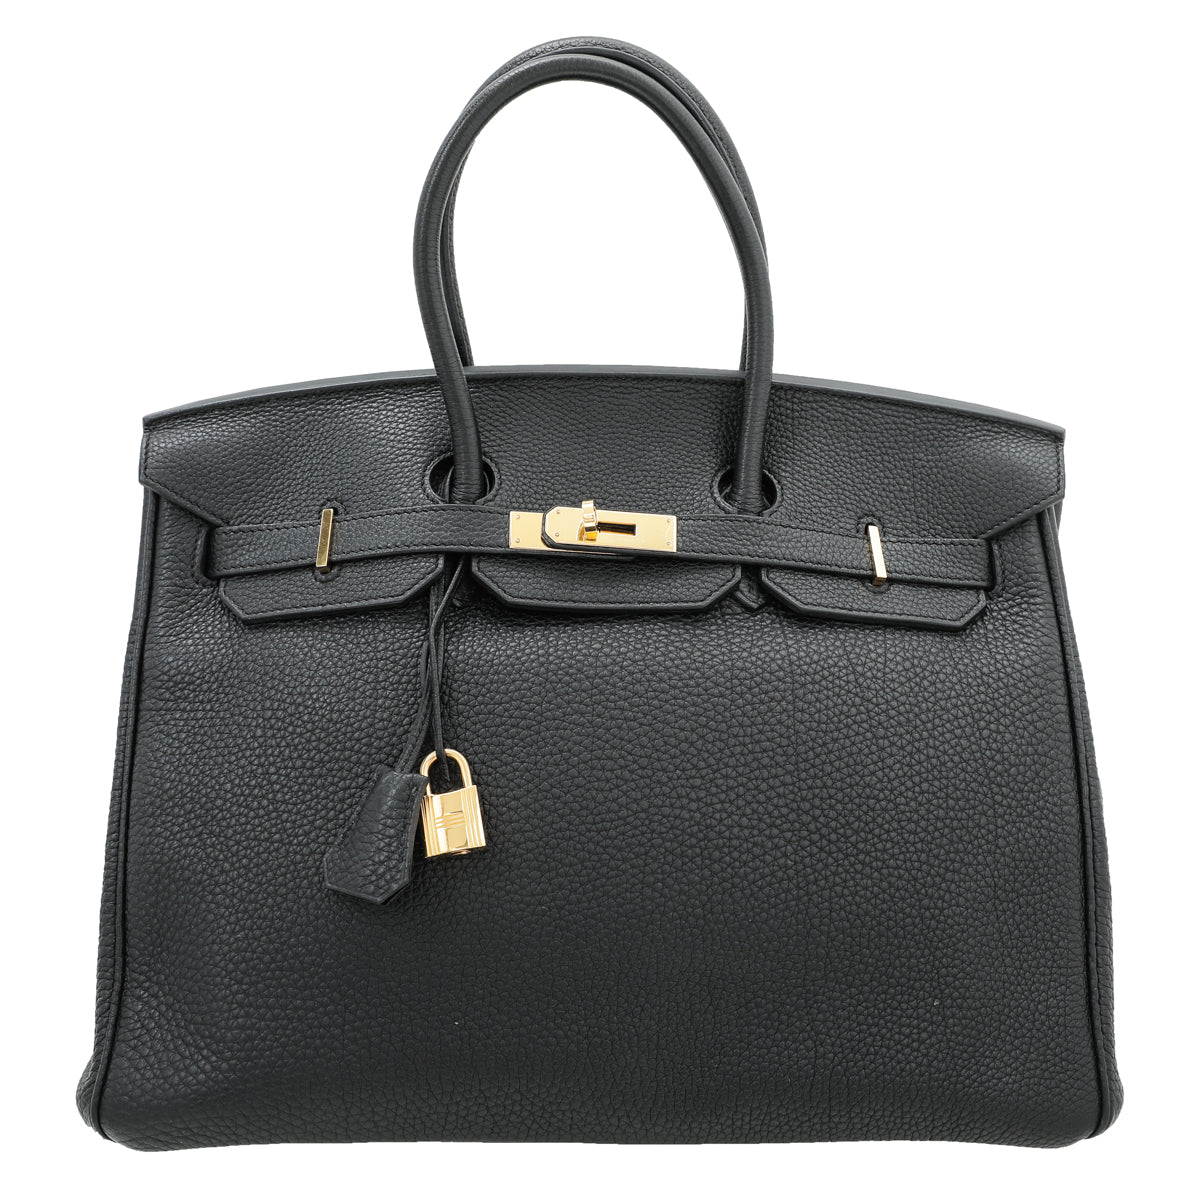 Hermes Black Birkin 35 Bag